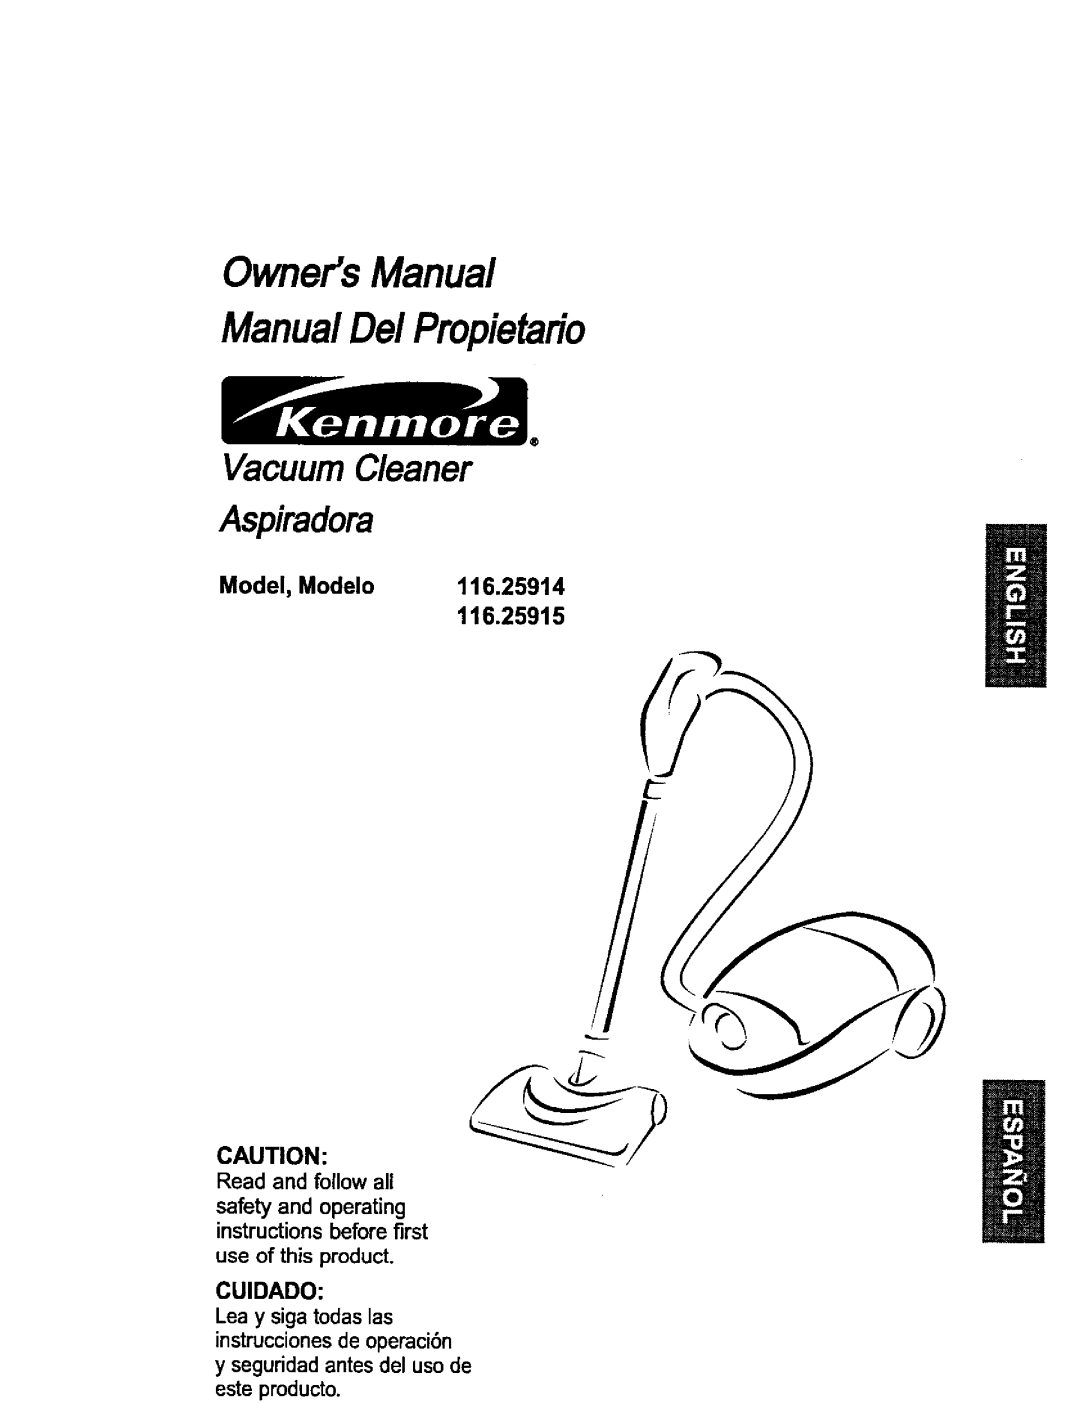 Kenmore 116.25915 owner manual ManualDe/Propietafio, Model, Modelo 116.25914, Read and follow all, Owners Manual 